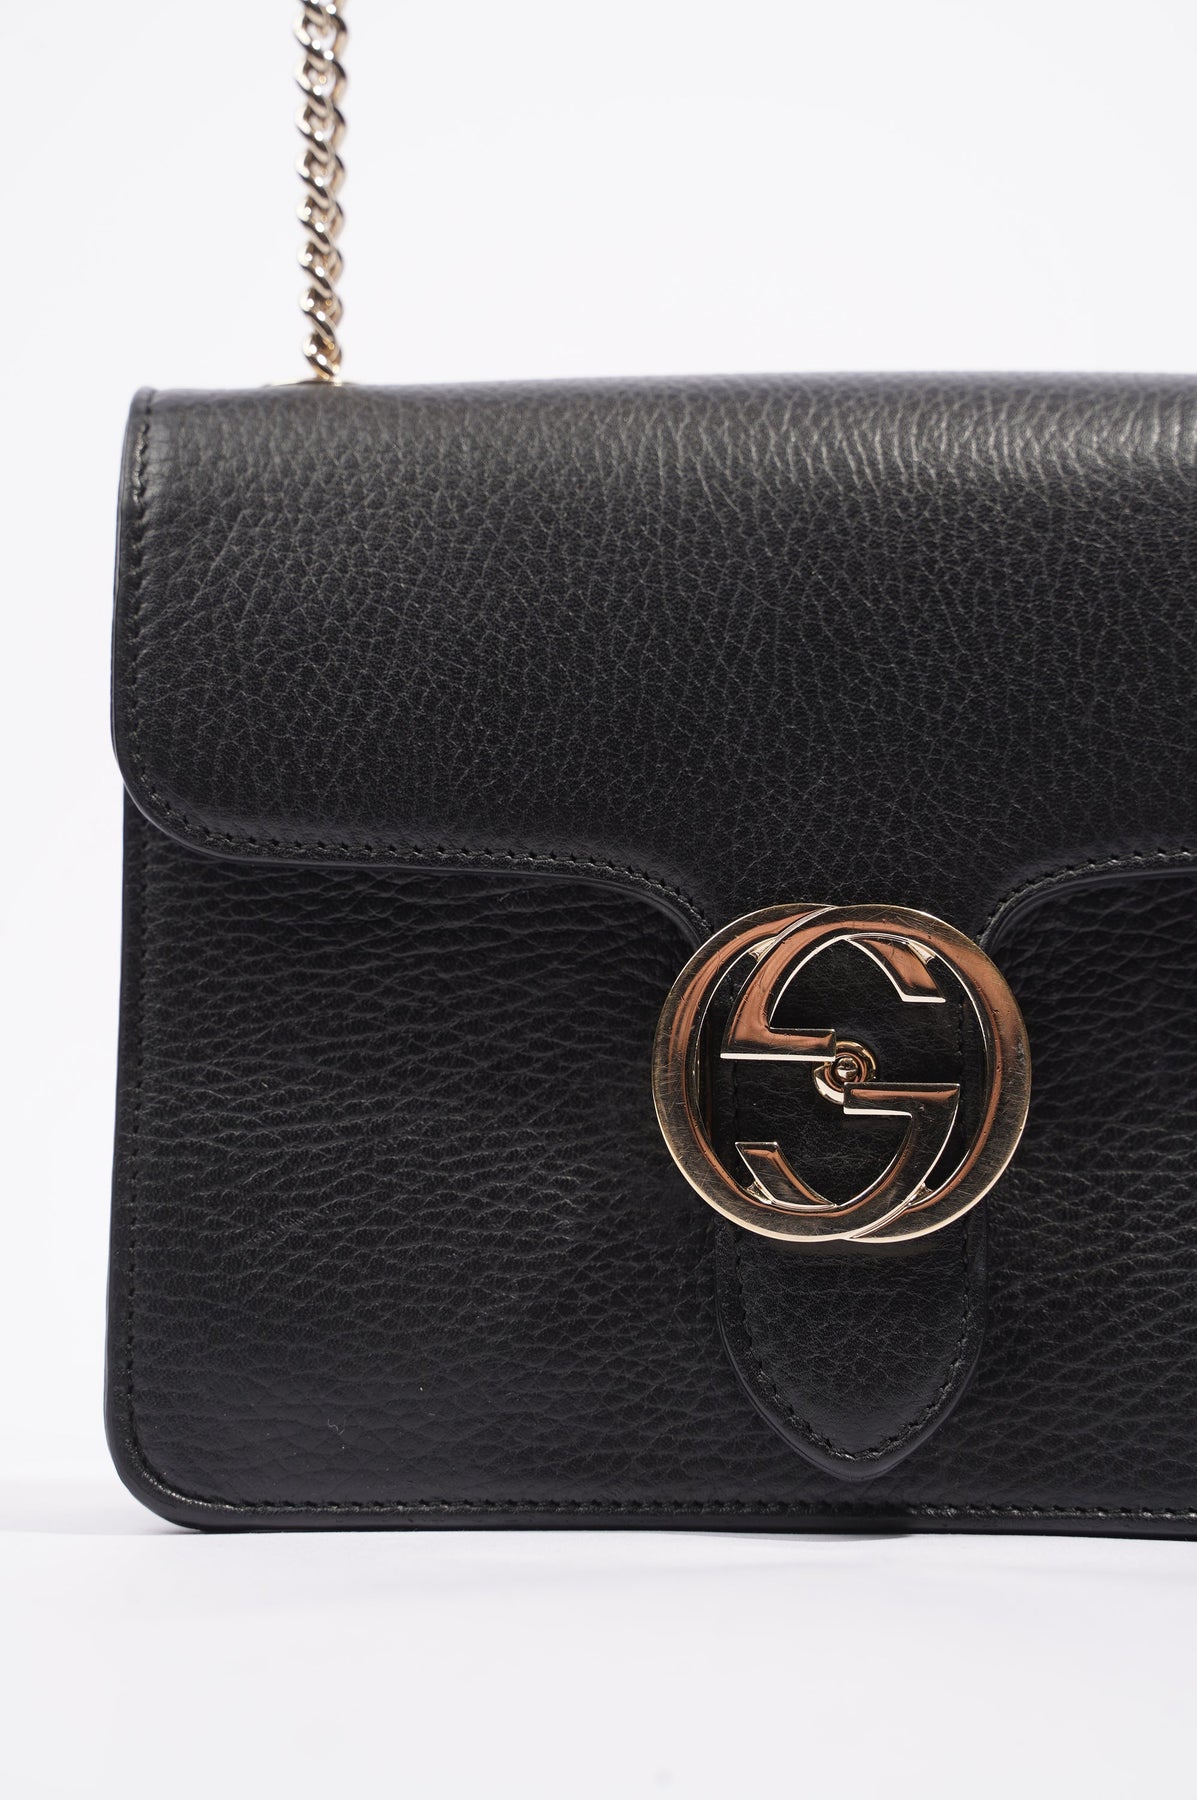 Gucci Green Leather Interlocking Bag – EYE LUXURY CONCIERGE